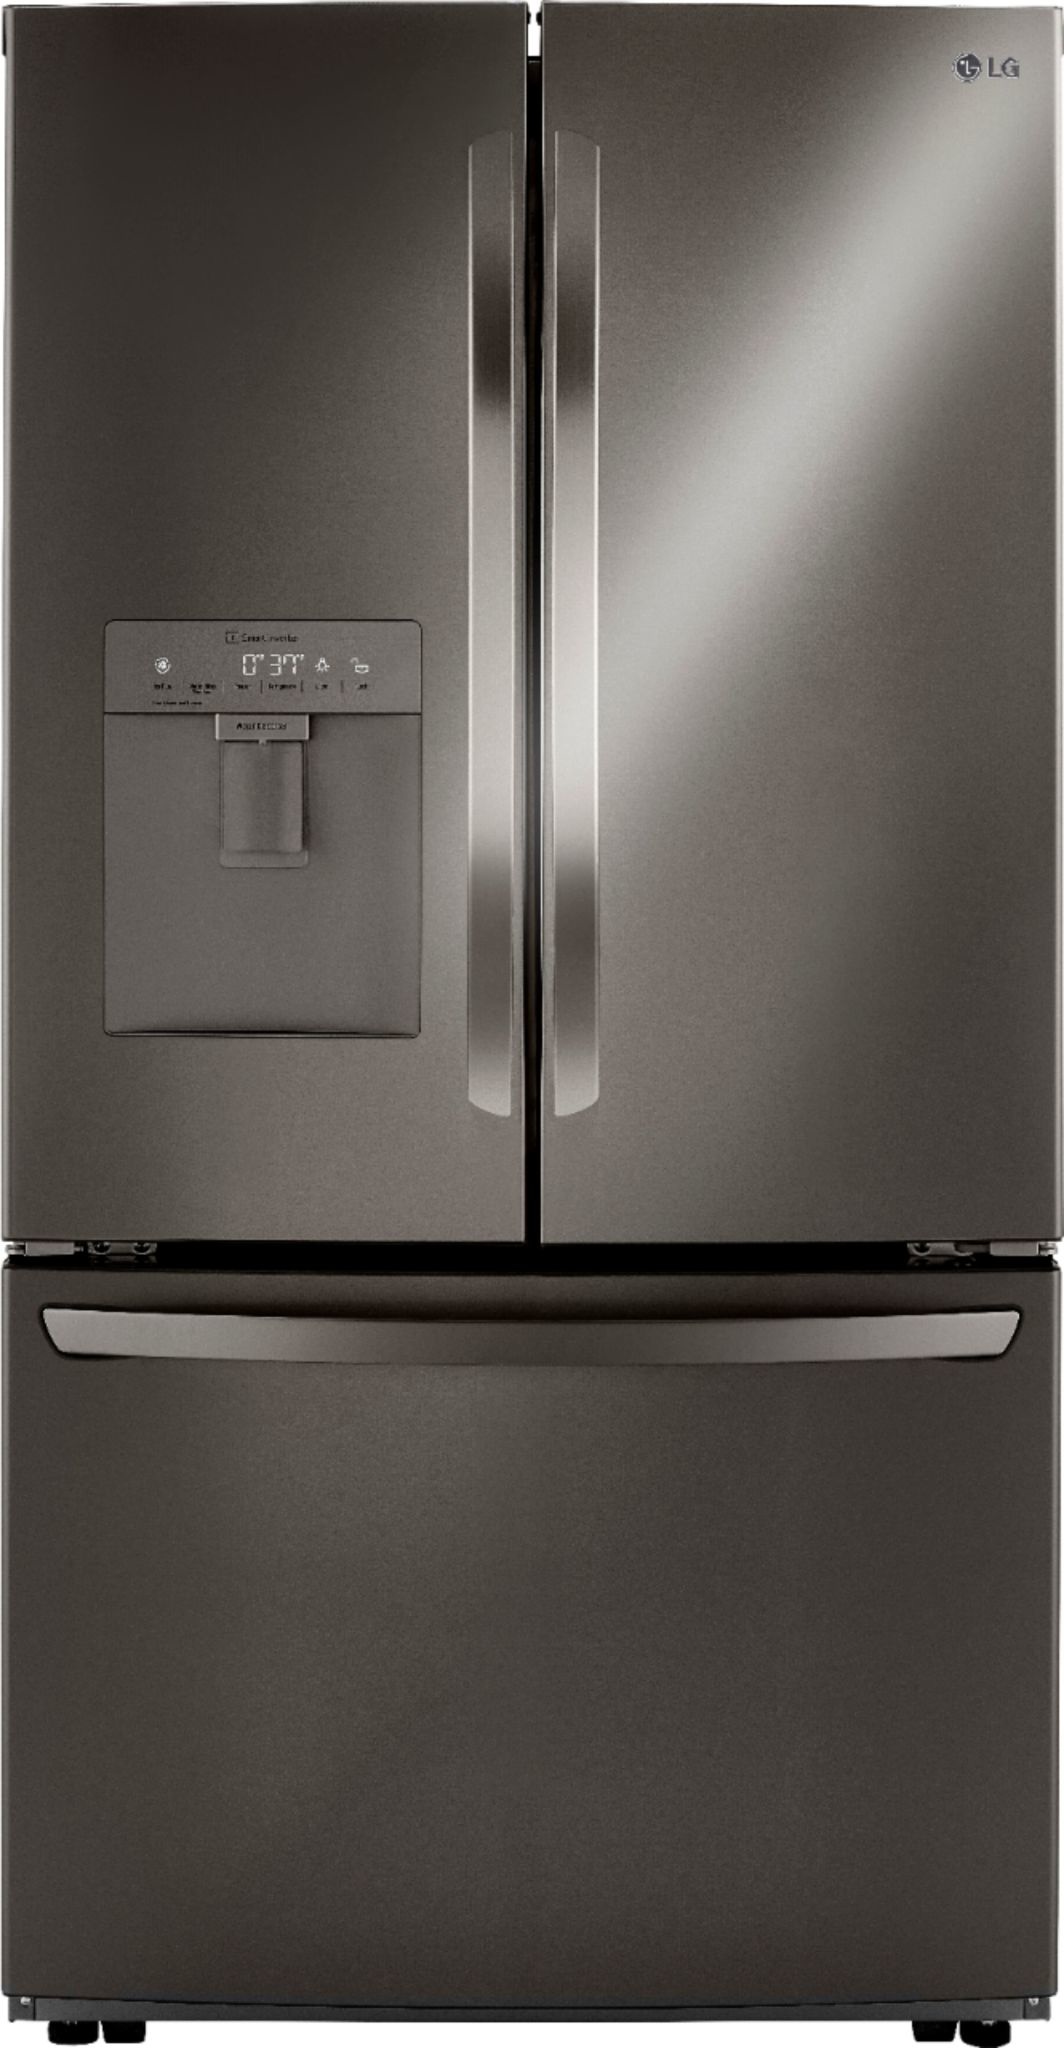 LG *LG  LRFWS2906D  29 Cu. Ft. 3-Door French Door Smart Refrigerator with Ice Maker and External Water Dispenser - Black Stainless Steel